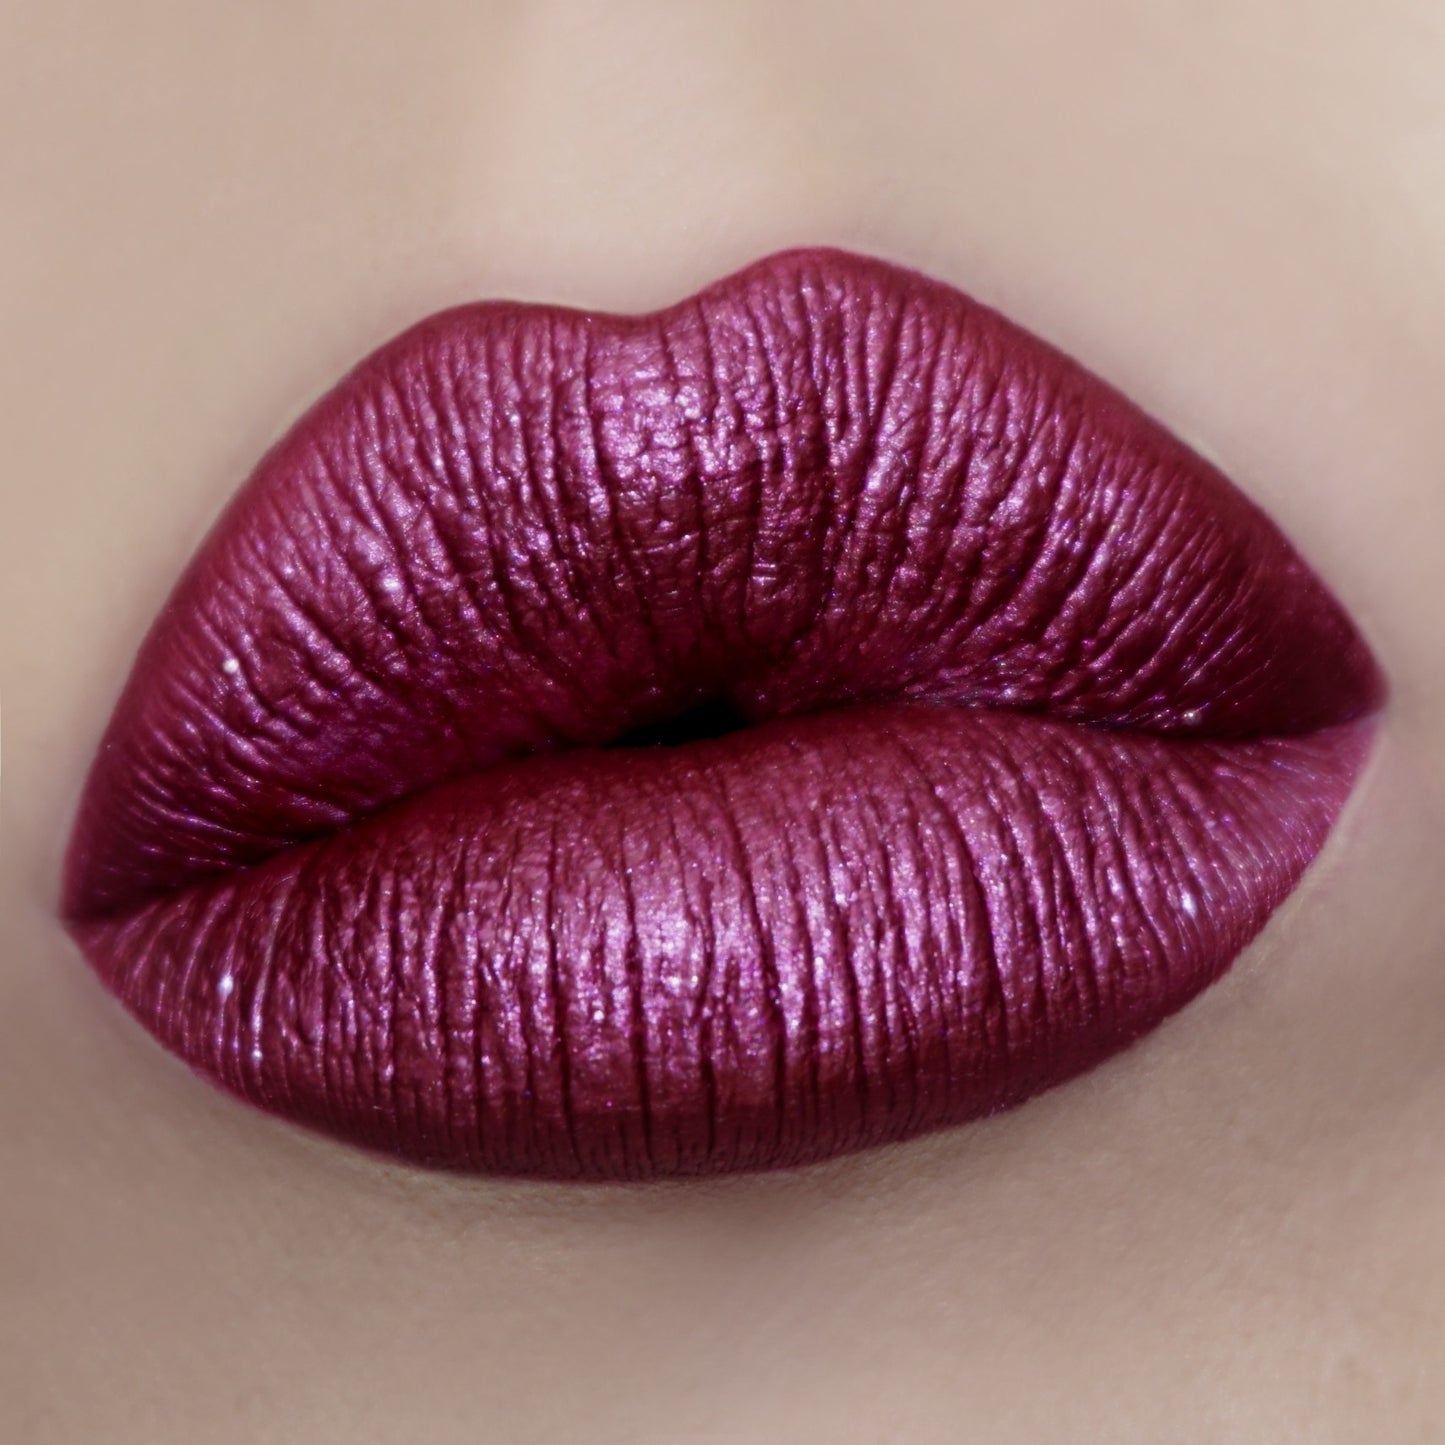 Gerard Cosmetics Hydra-Matte Liquid Lipstick